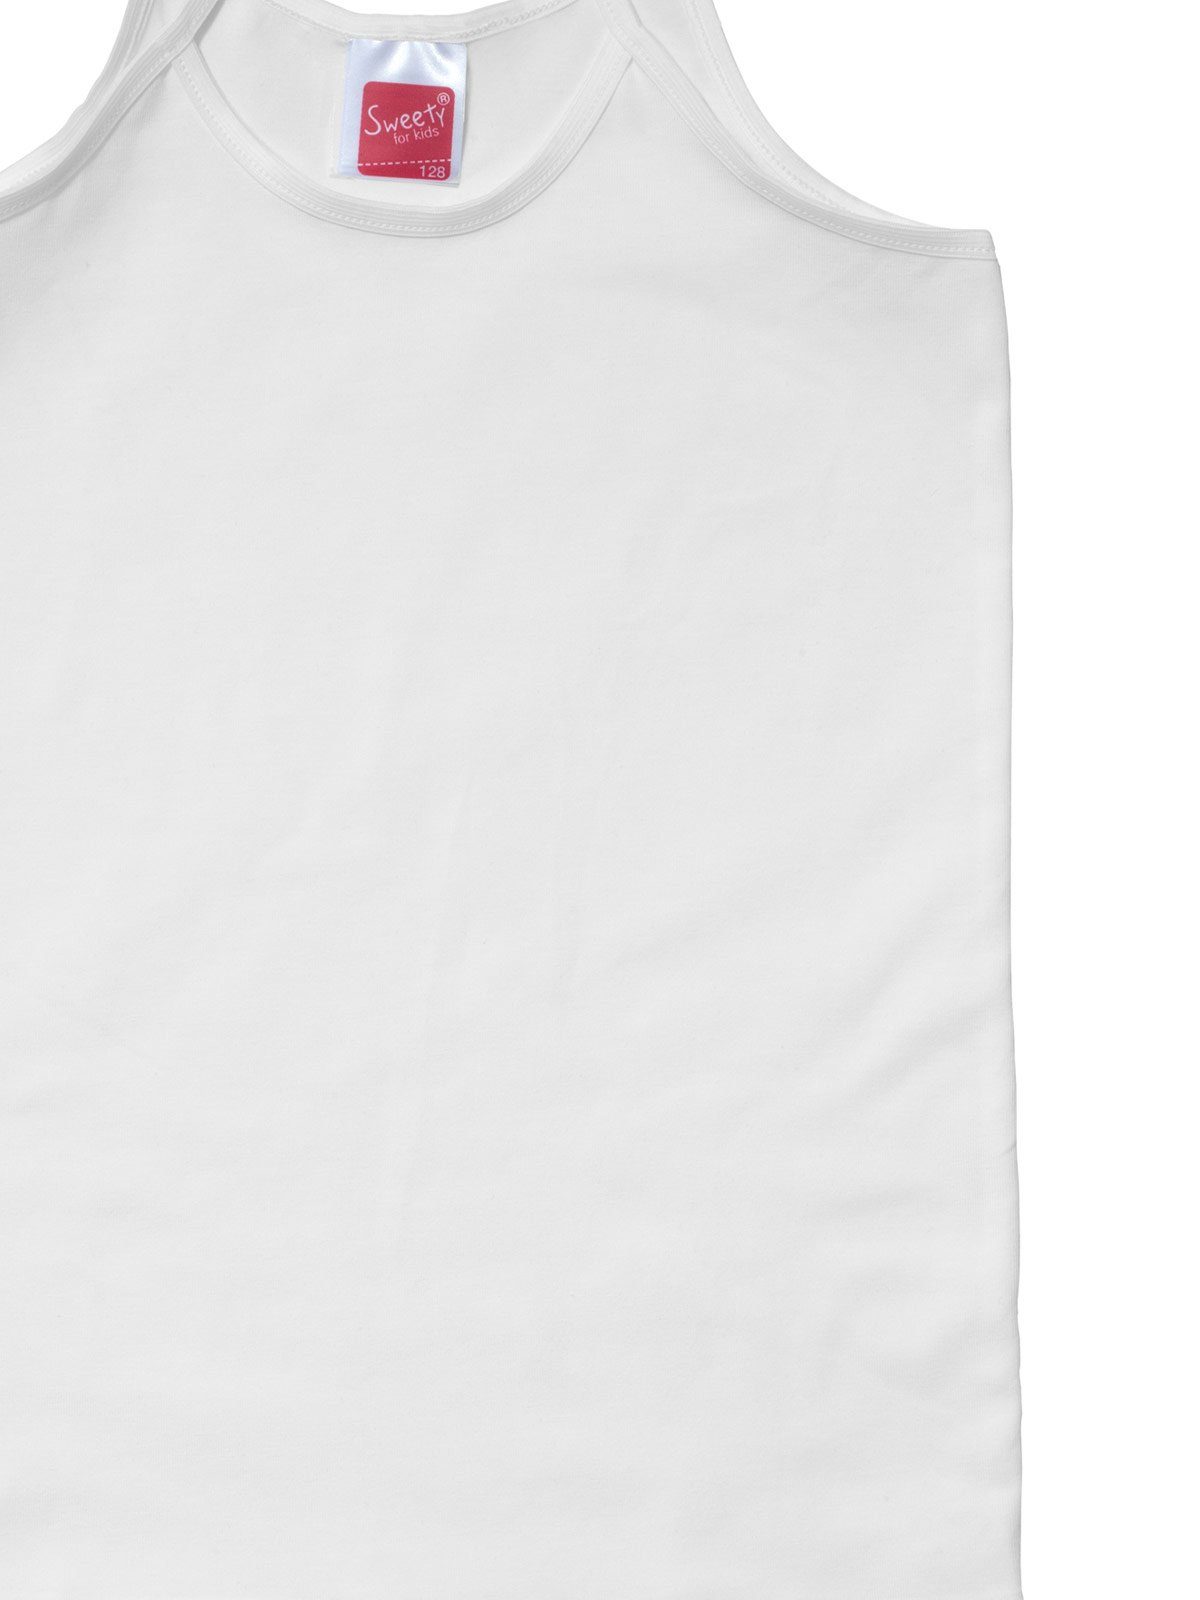 Markenqualität (Stück, Single Jersey 1-St) for Trägerhemd hohe Kids Sweety Unterhemd Mädchen